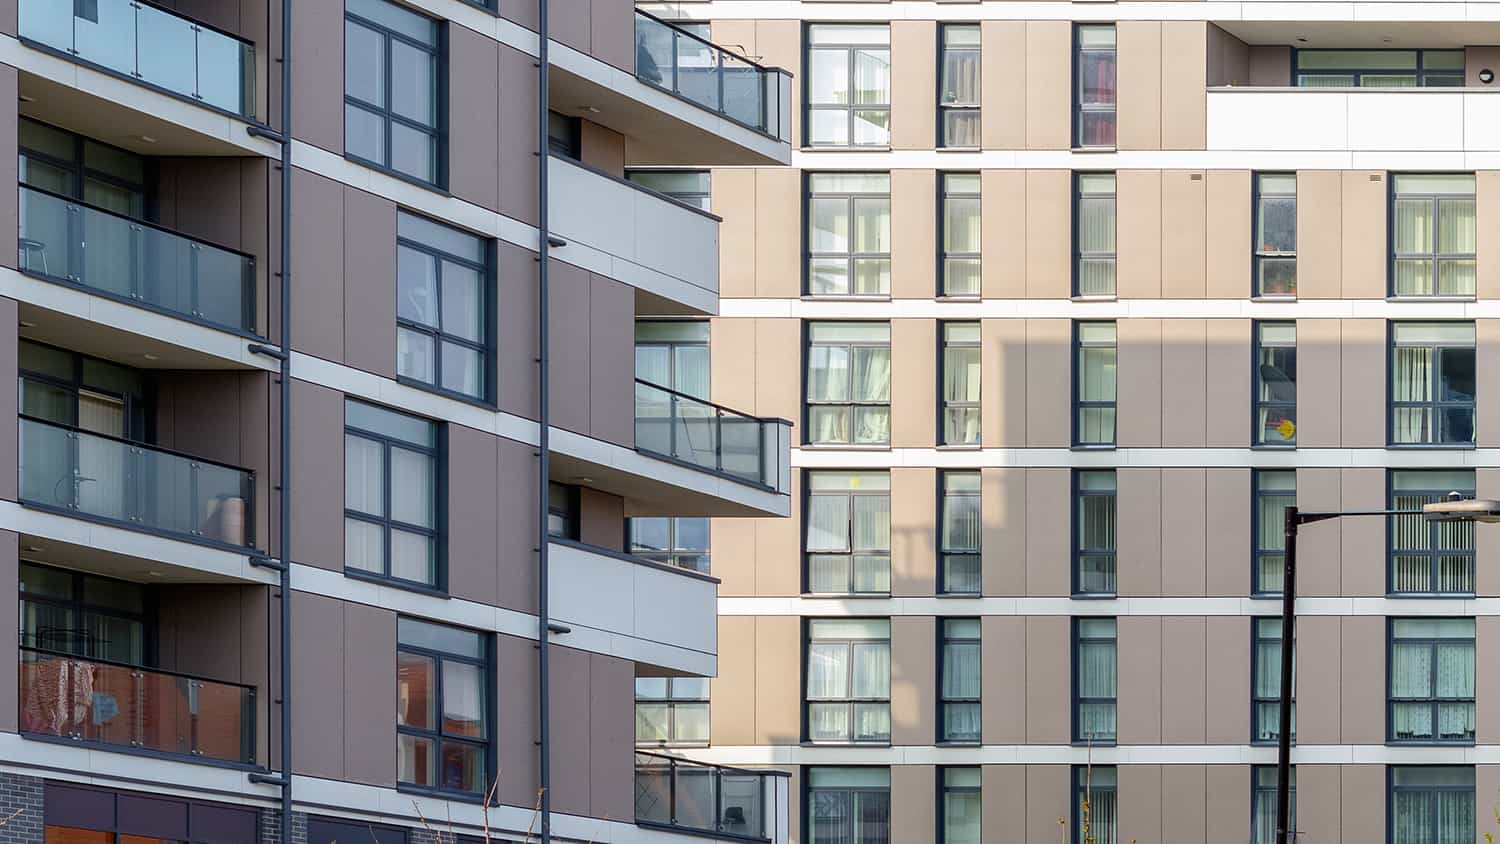 New blocks of flats in Poplar, East London